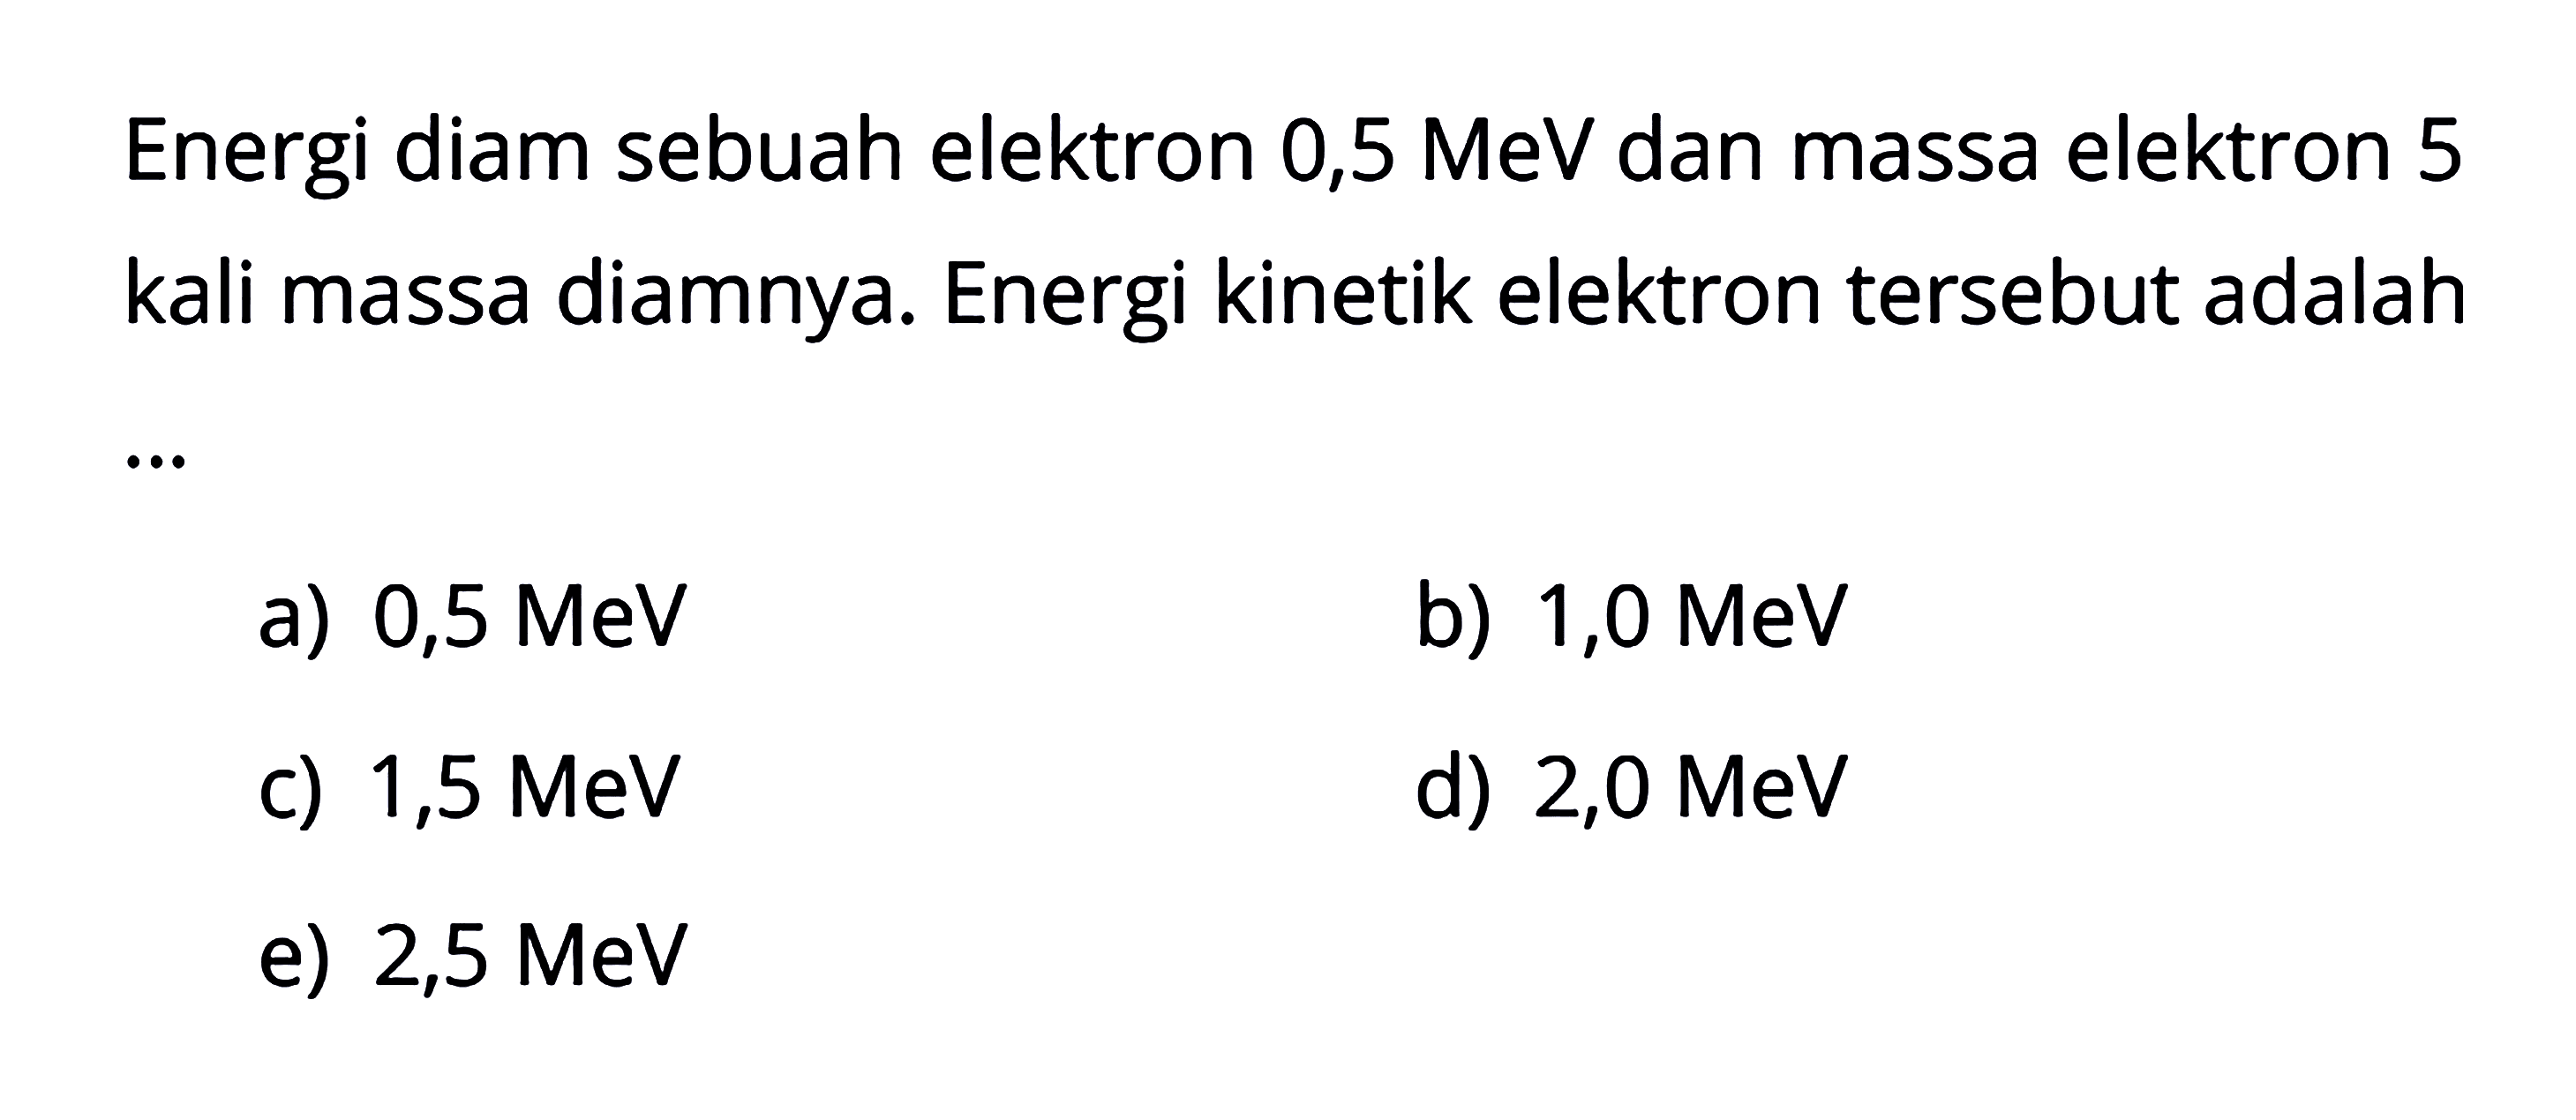 Energi diam sebuah elektron 0,5 MeV dan massa elektron 5 kali massa diamnya. Energi kinetik elektron tersebut adalah...a)  0,5 MeV b)  1,0 MeV c)  1,5 MeV d)  2,0 MeV e)  2,5 MeV 